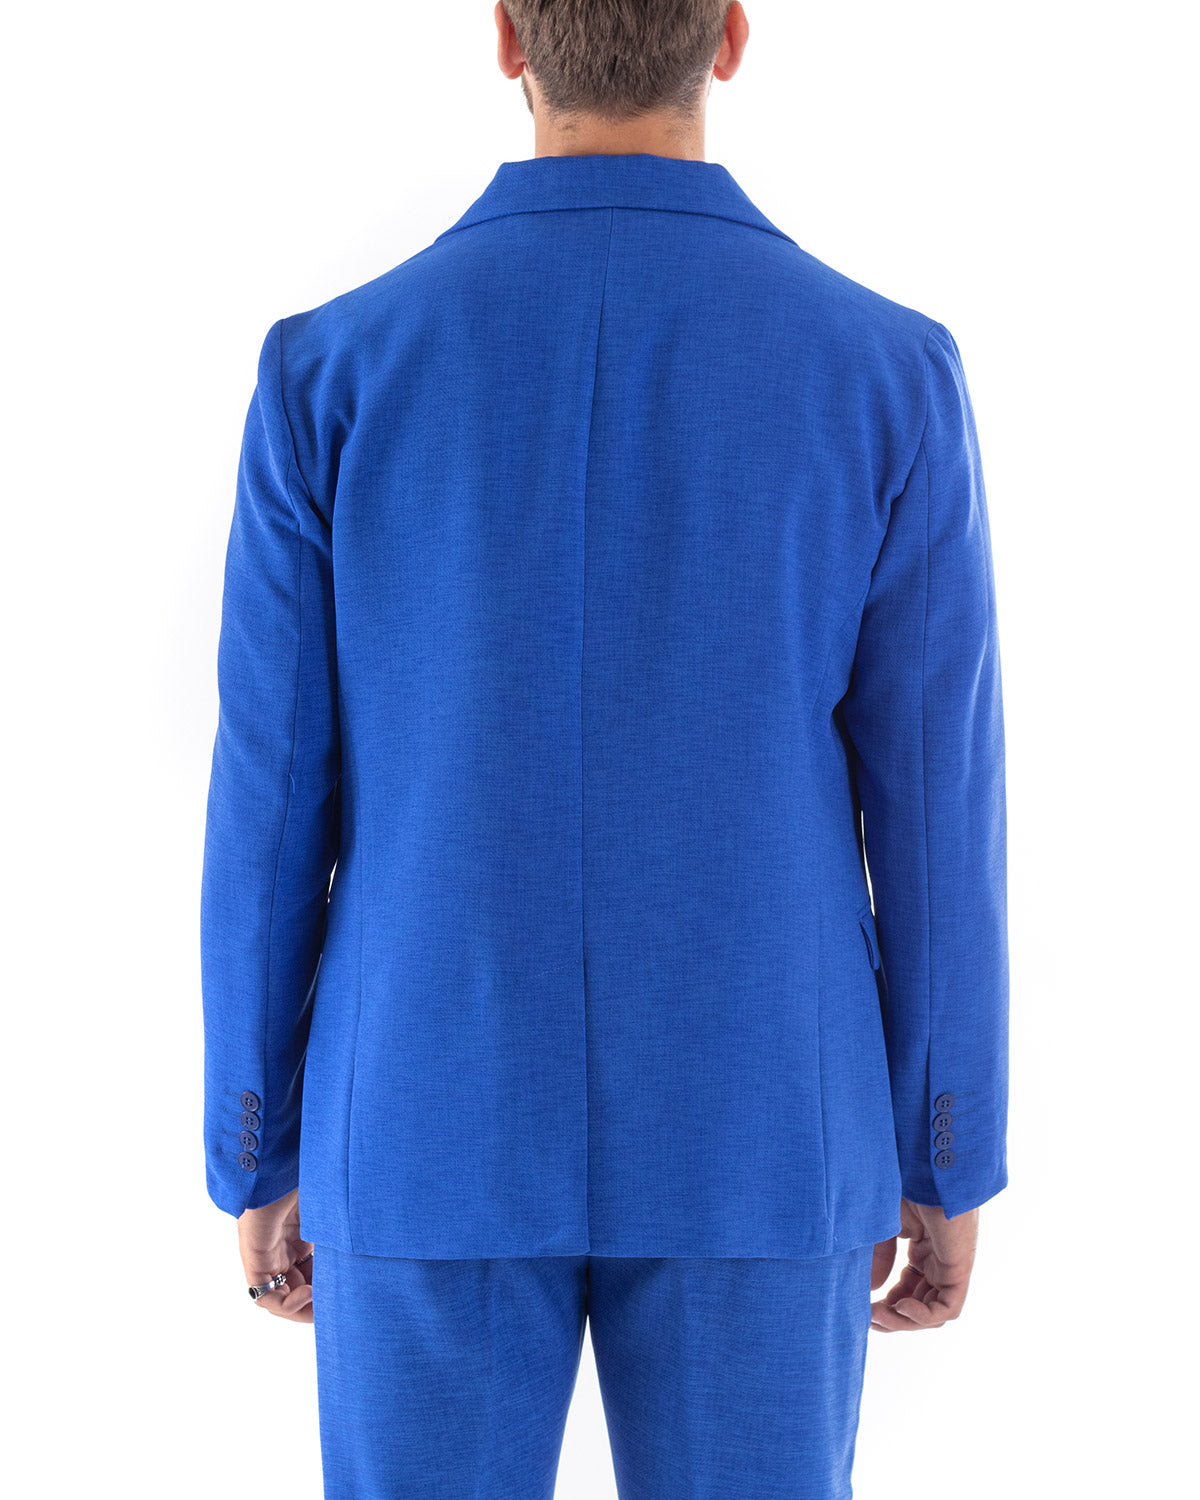 Double-breasted Men's Suit Viscose Suit Jacket Trousers Royal Blue Melange Elegant Ceremony GIOSAL-OU2203A